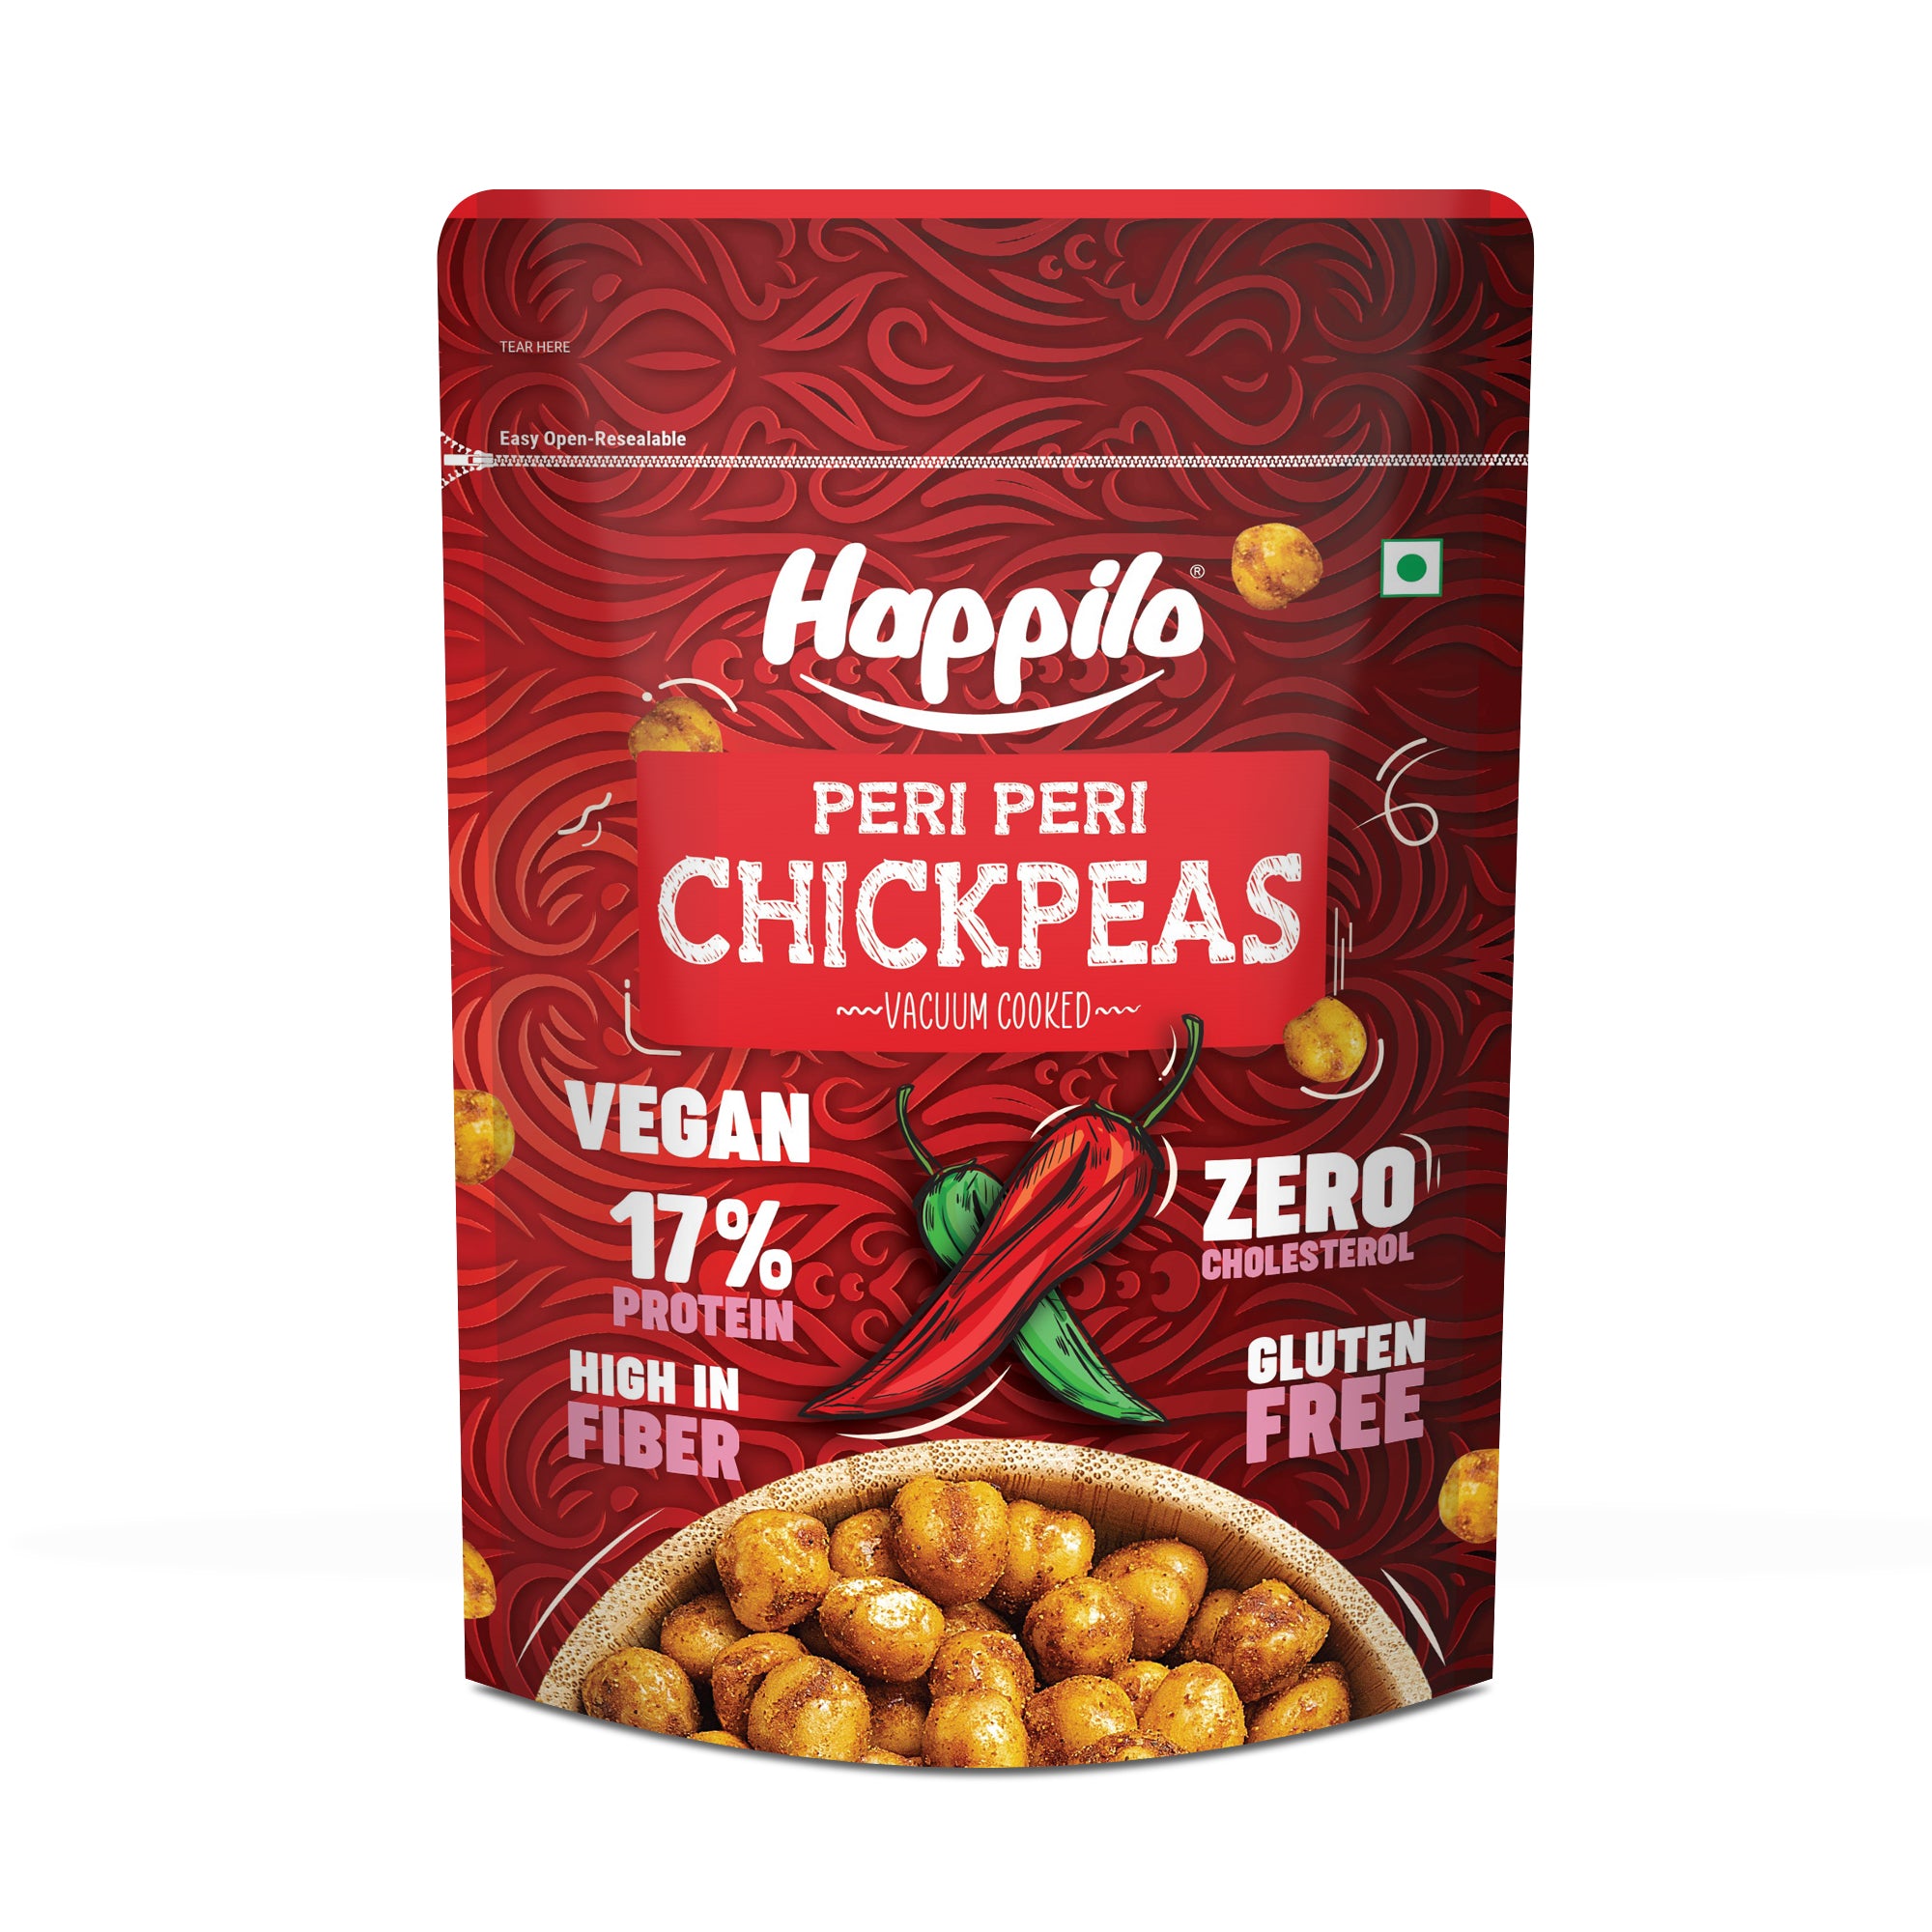 Happilo Premium Super Snack Peri Peri Chickpeas 110g, Crunchy and Delicious, Super Healthy